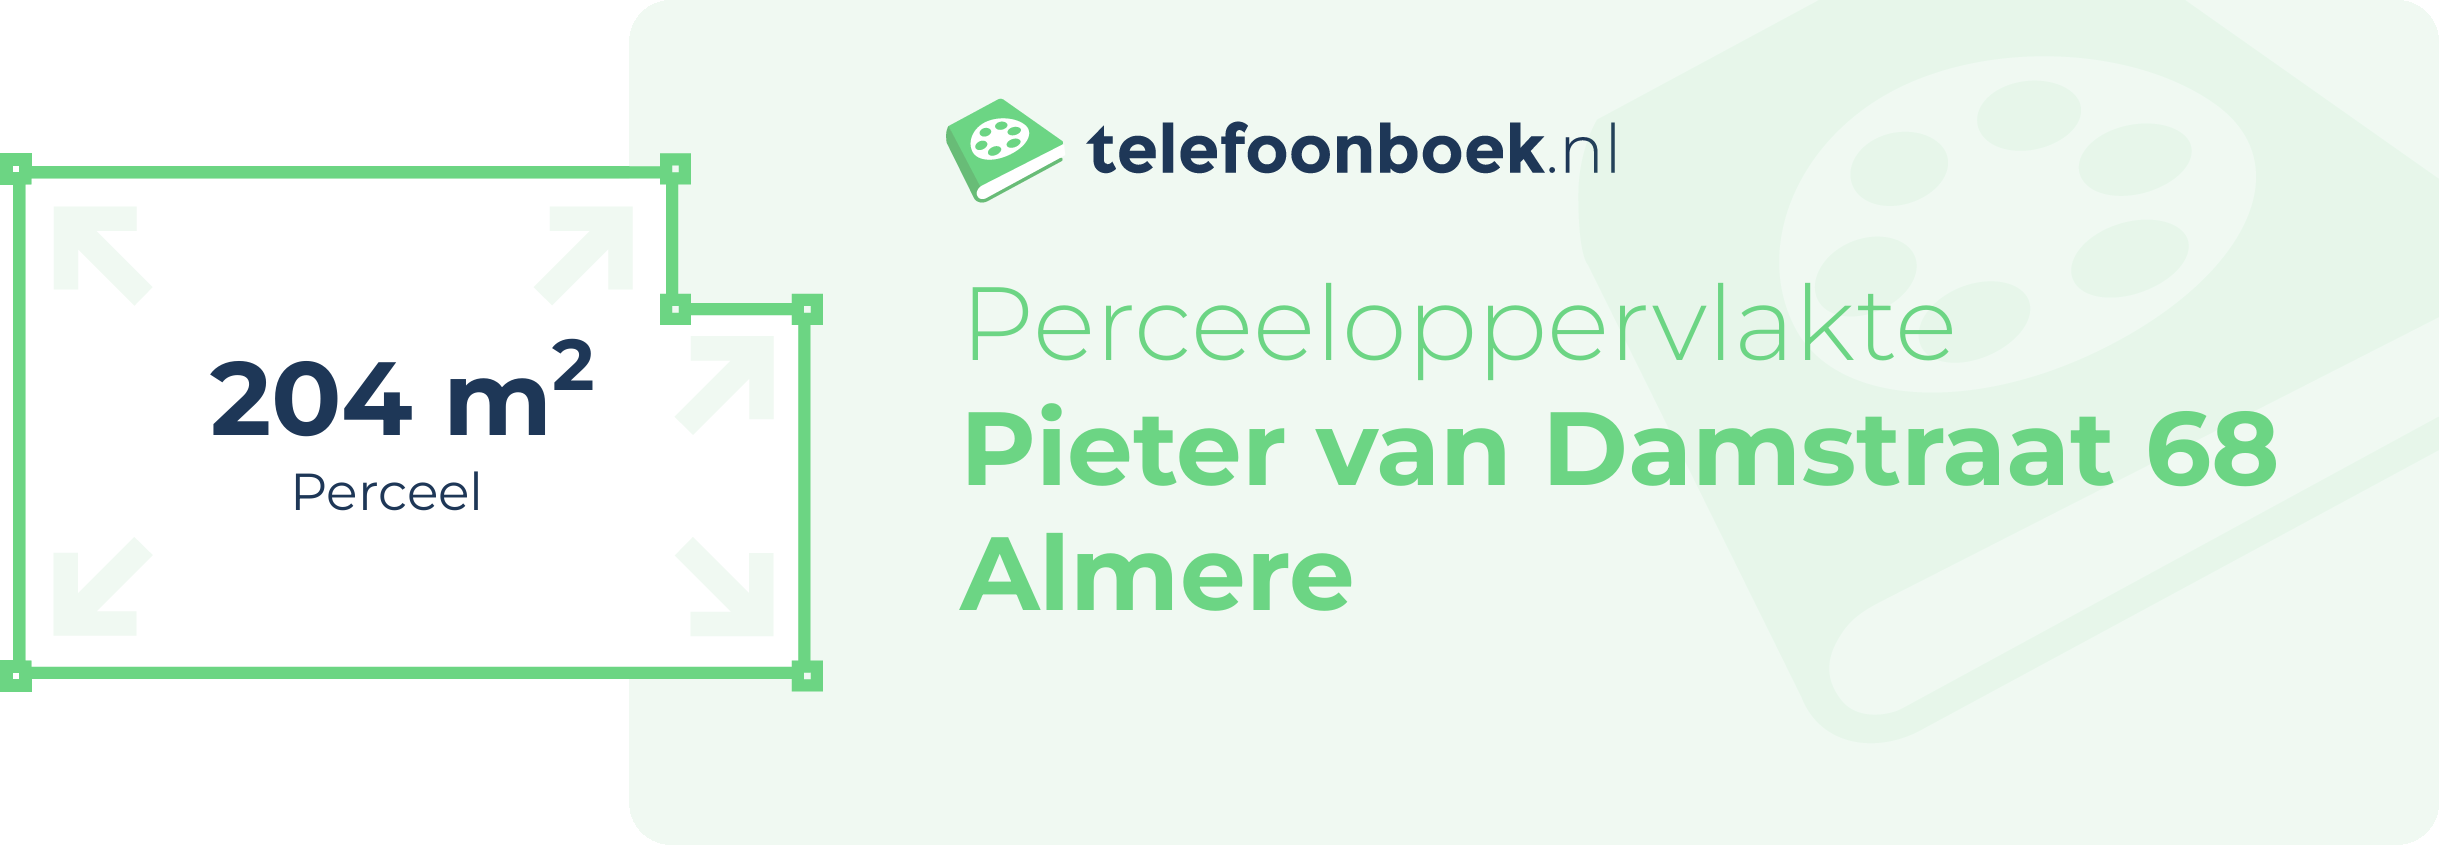 Perceeloppervlakte Pieter Van Damstraat 68 Almere